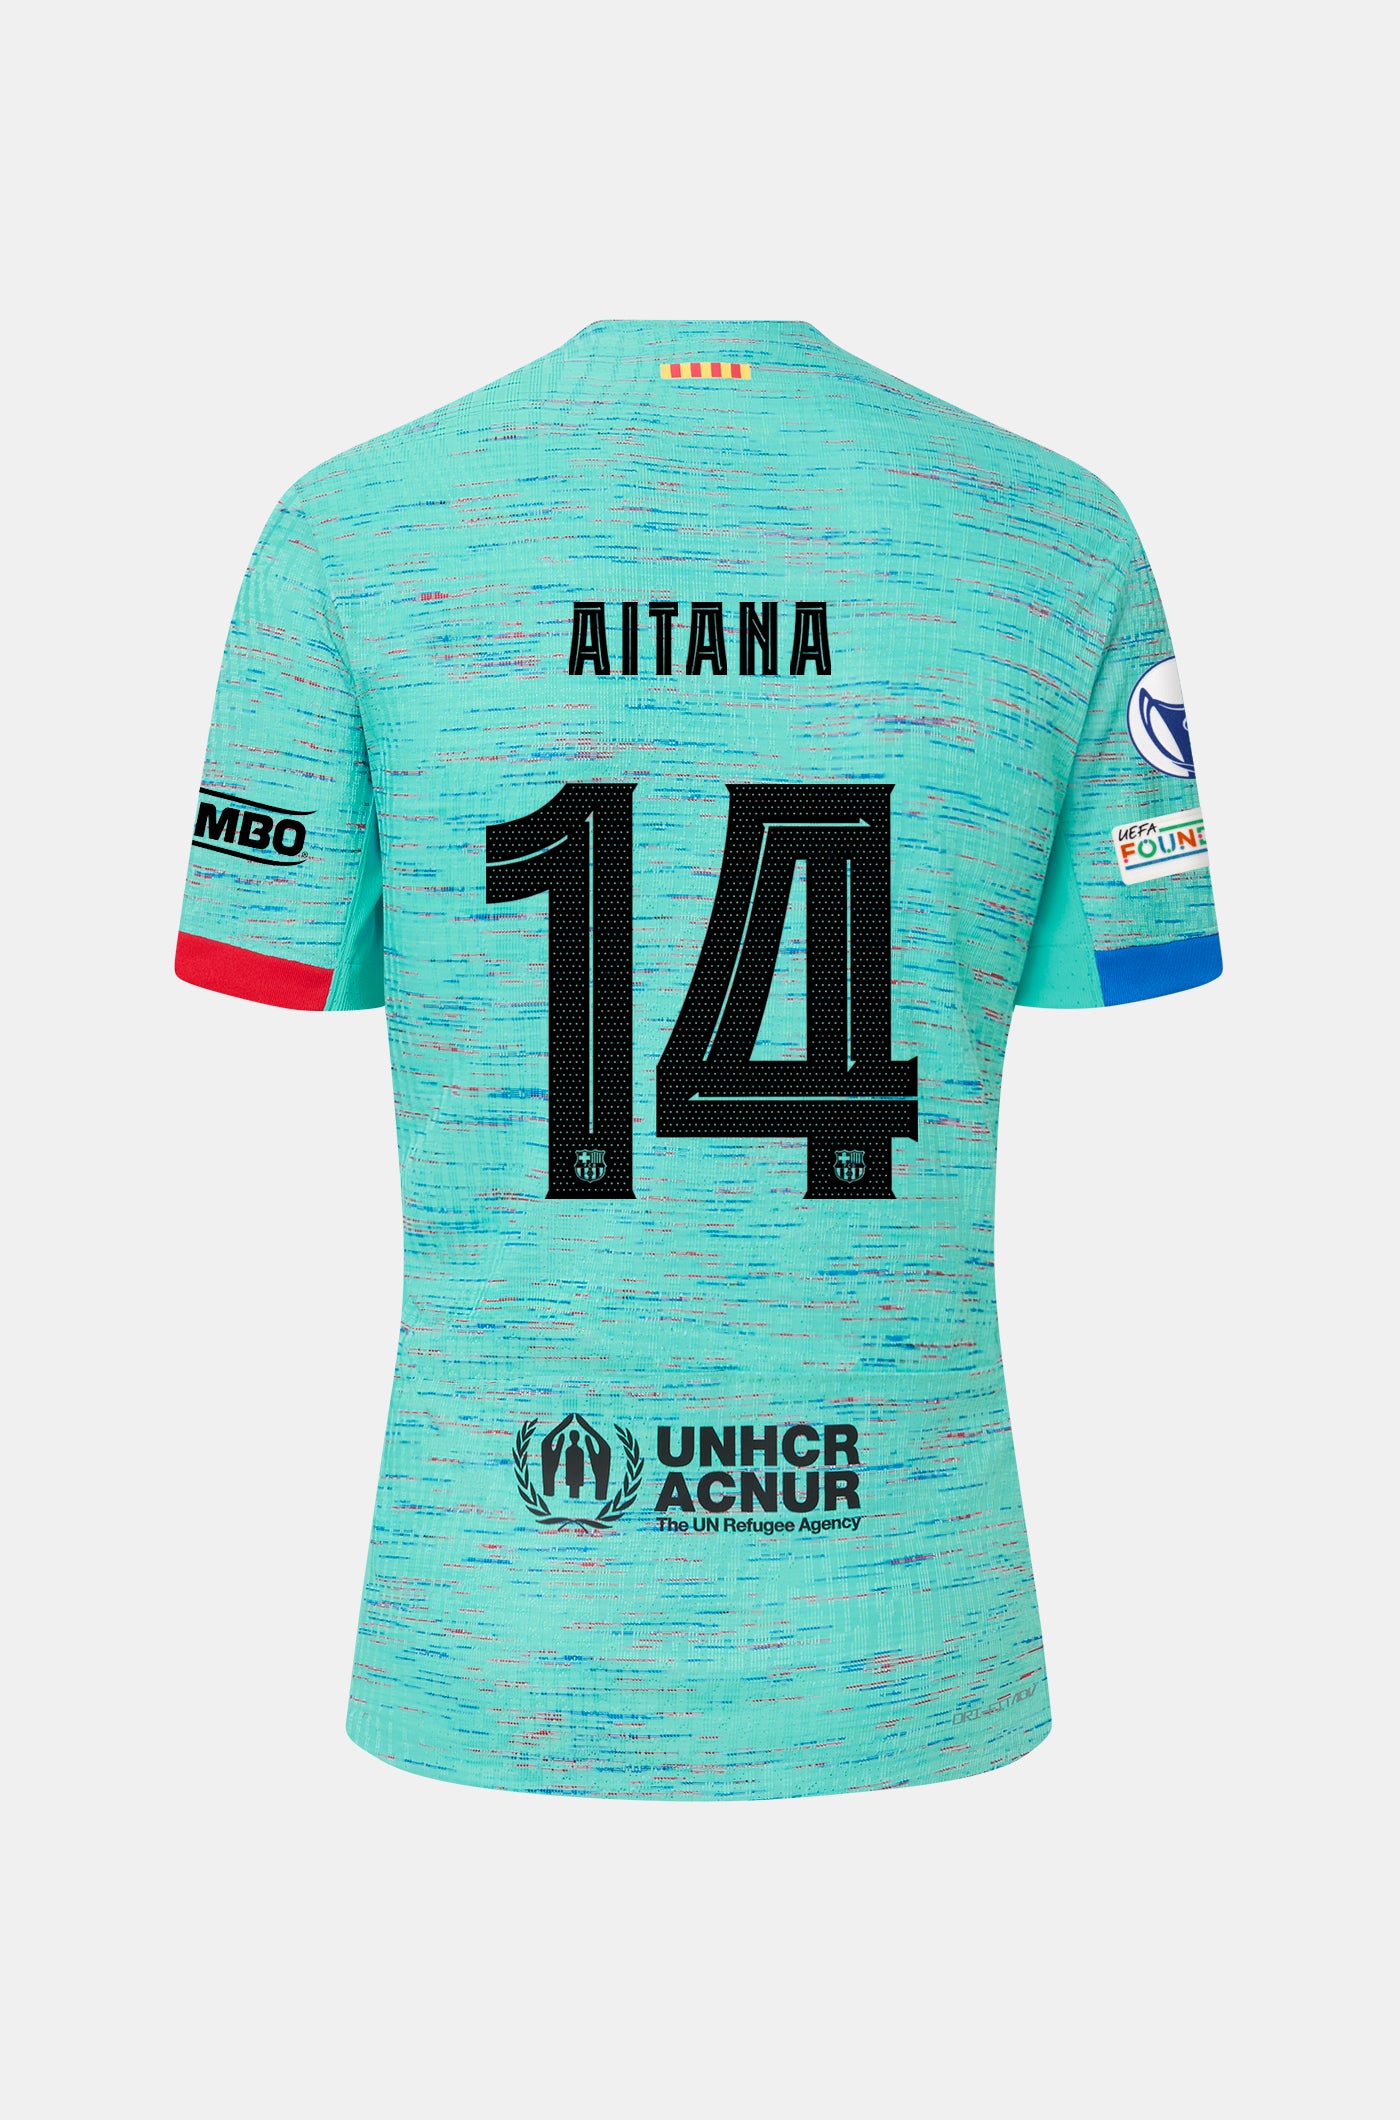 UWCL FC Barcelona third shirt 23/24 Player's Edition - AITANA